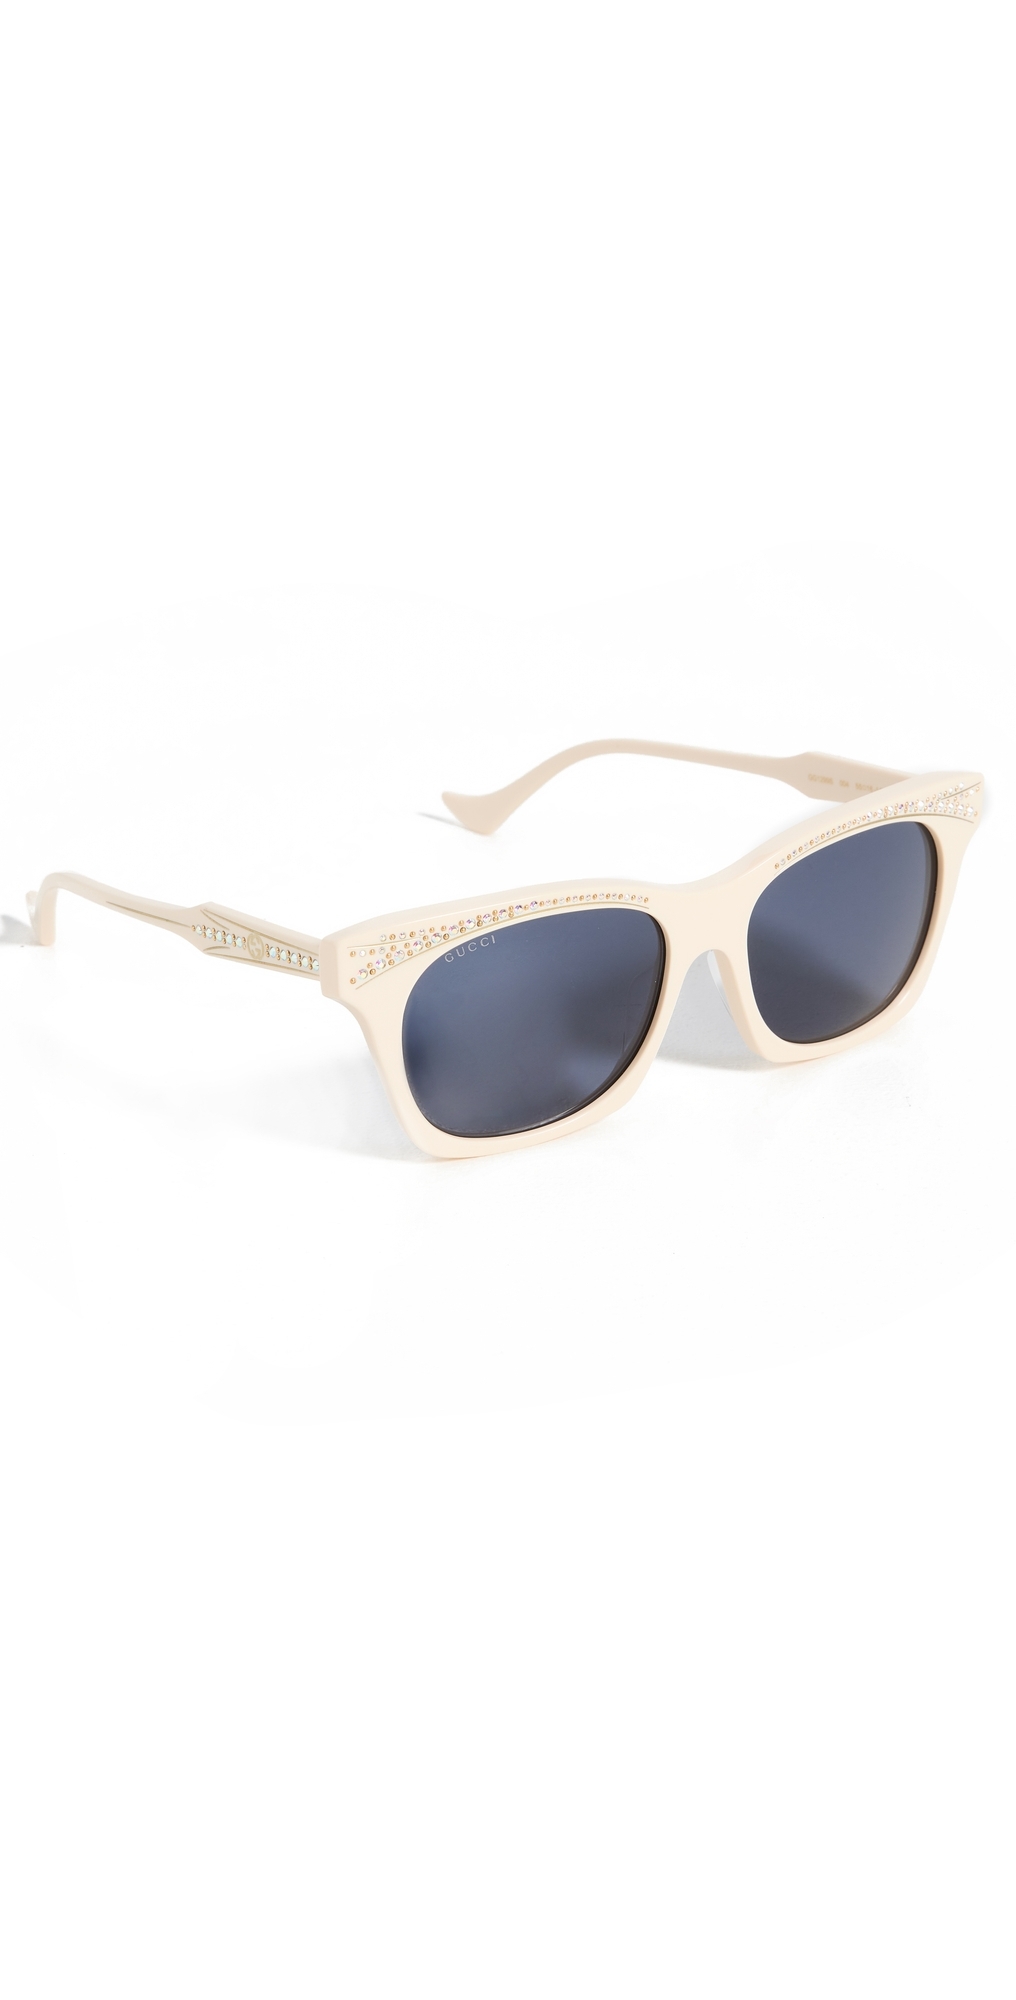 Gucci Winged Cat Eye Sunglasses Ivory-Ivory-Blue One Size